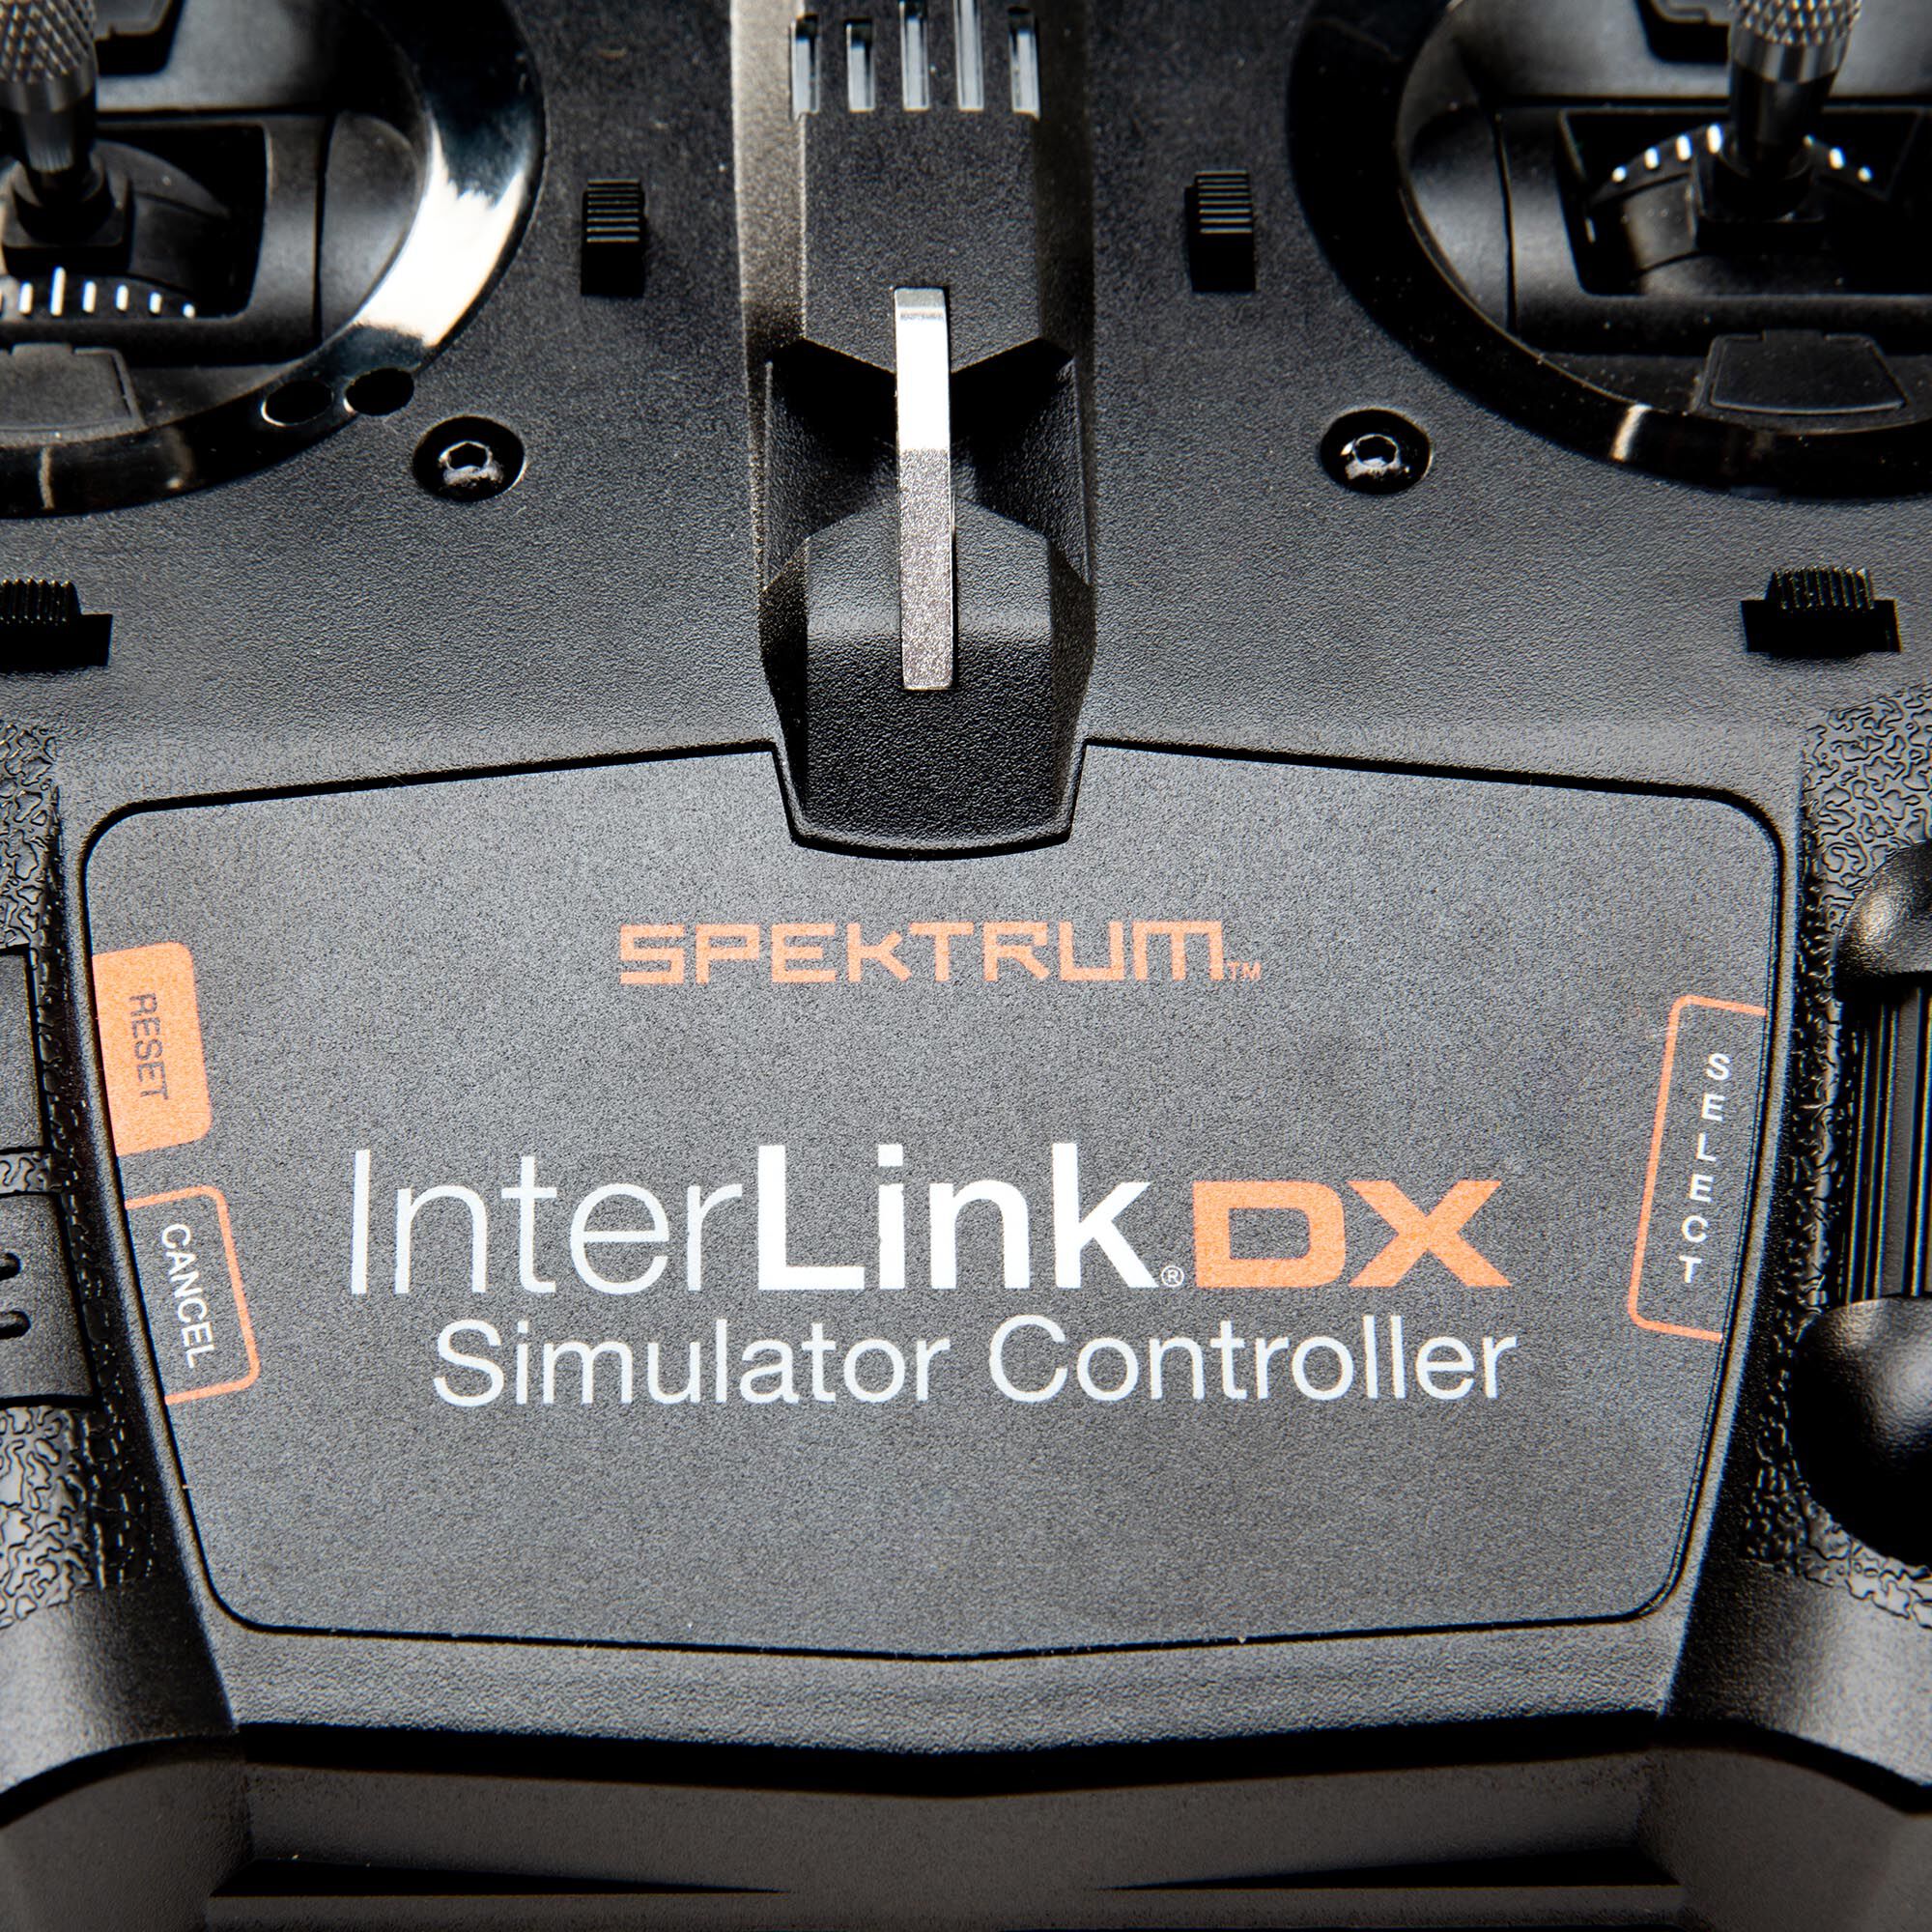 InterLink DX Simulator Controller with USB Plug | Spektrum